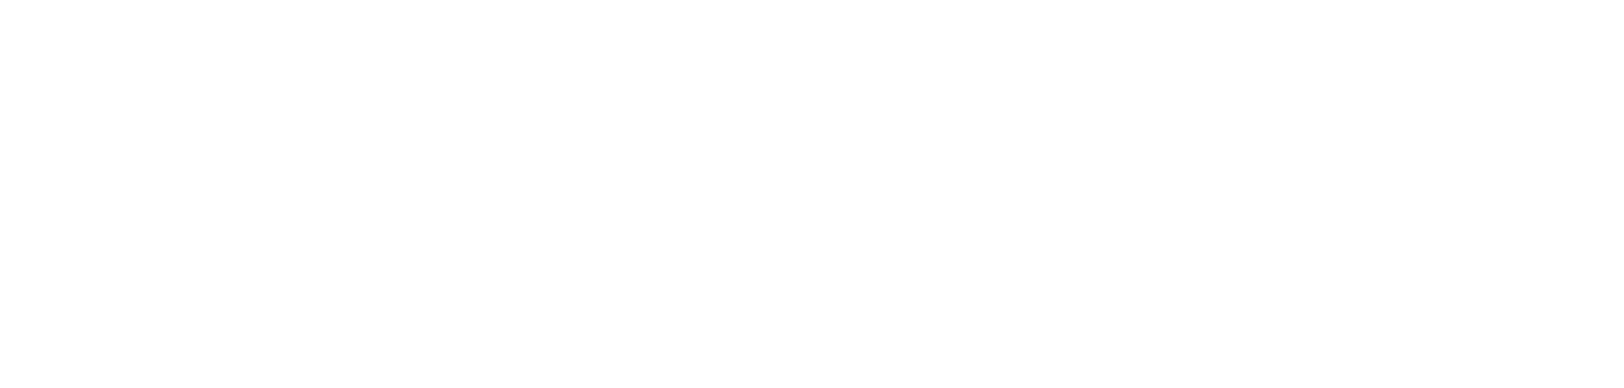 UNFCCC Logo white